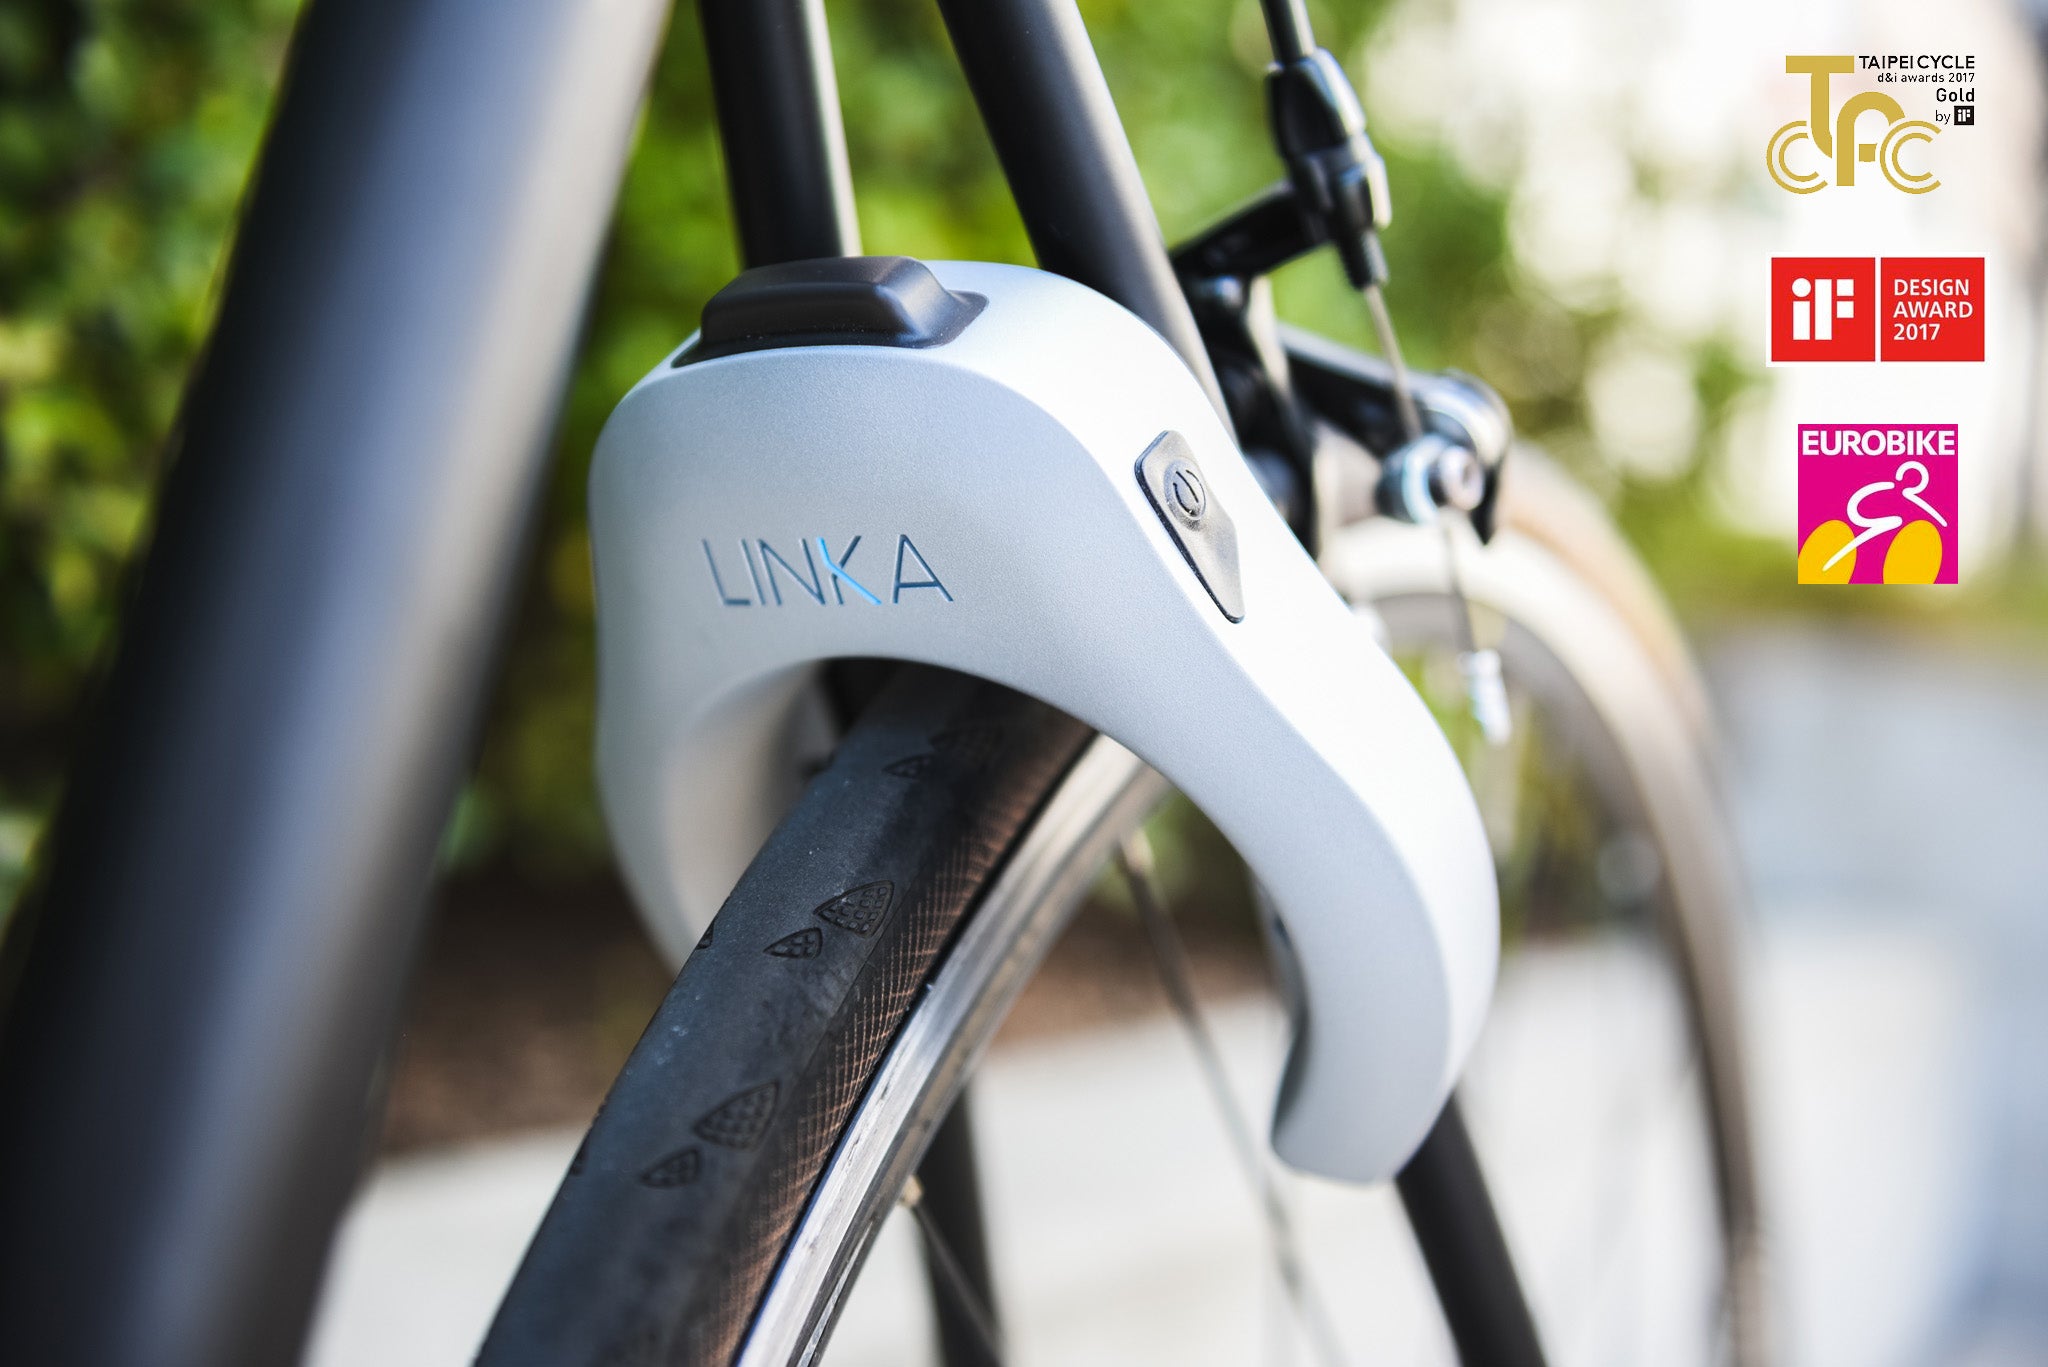 The Original LINKA Smart Bike Lock - Voted The Best Bike Lock